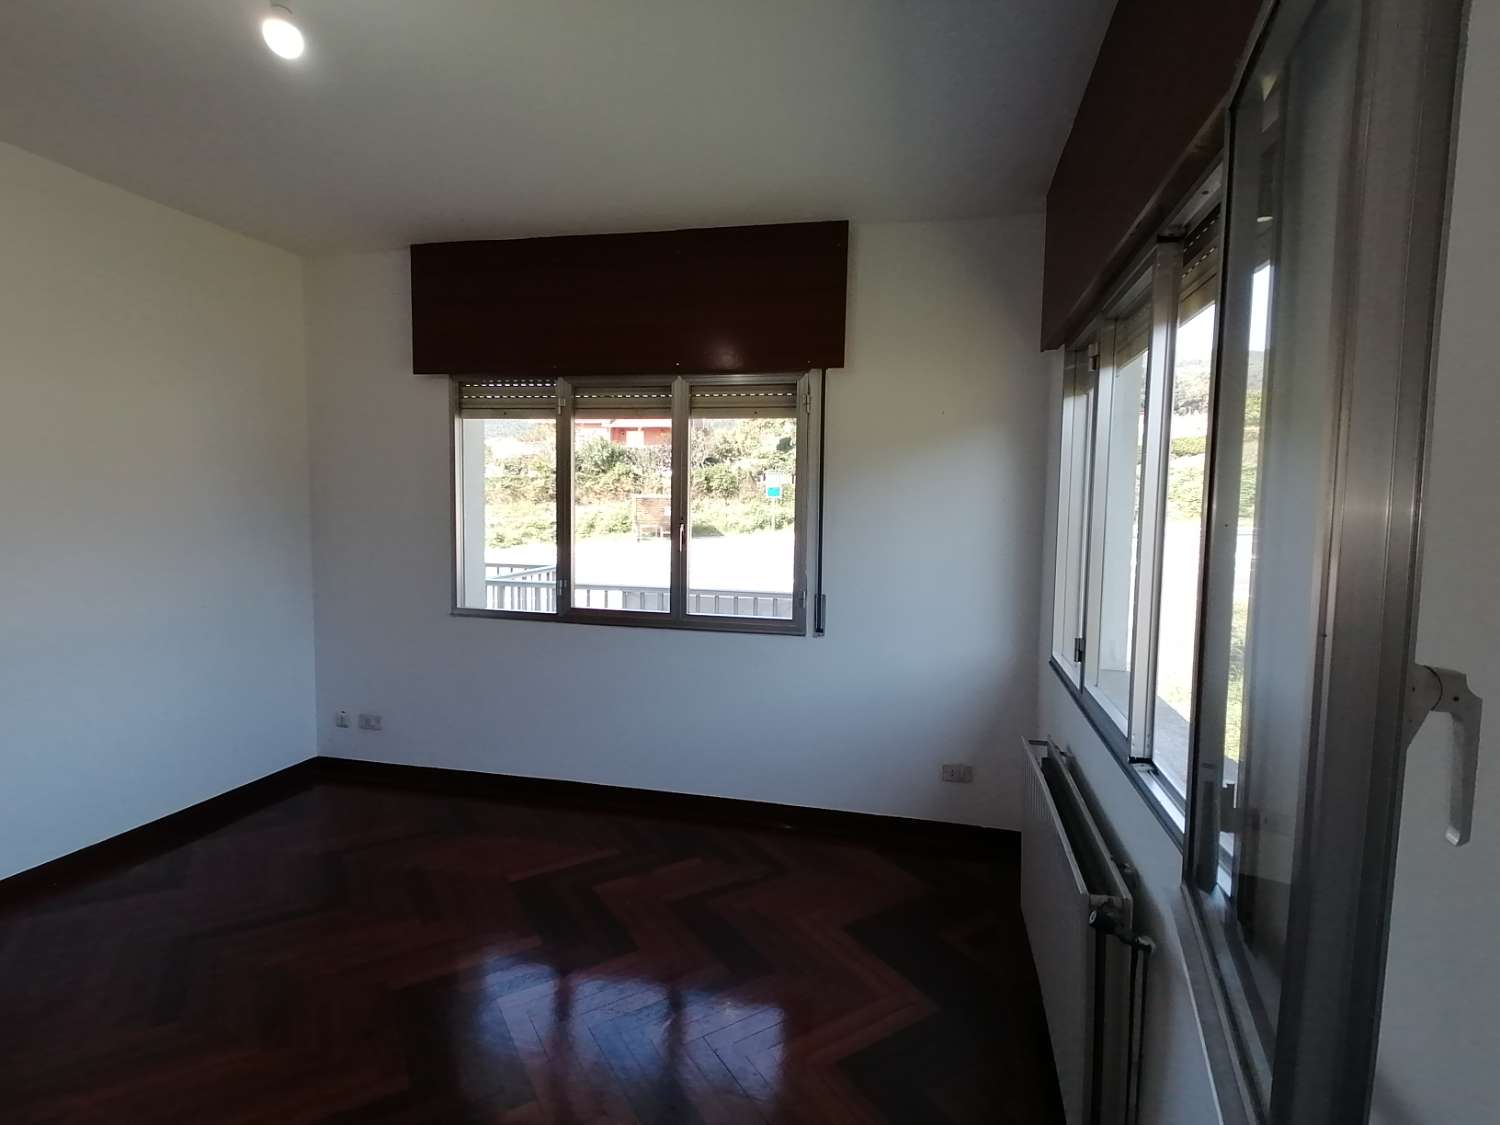 Pontevedra: A7134: Casa con finca in vendita a 4 km da Pontevedra...